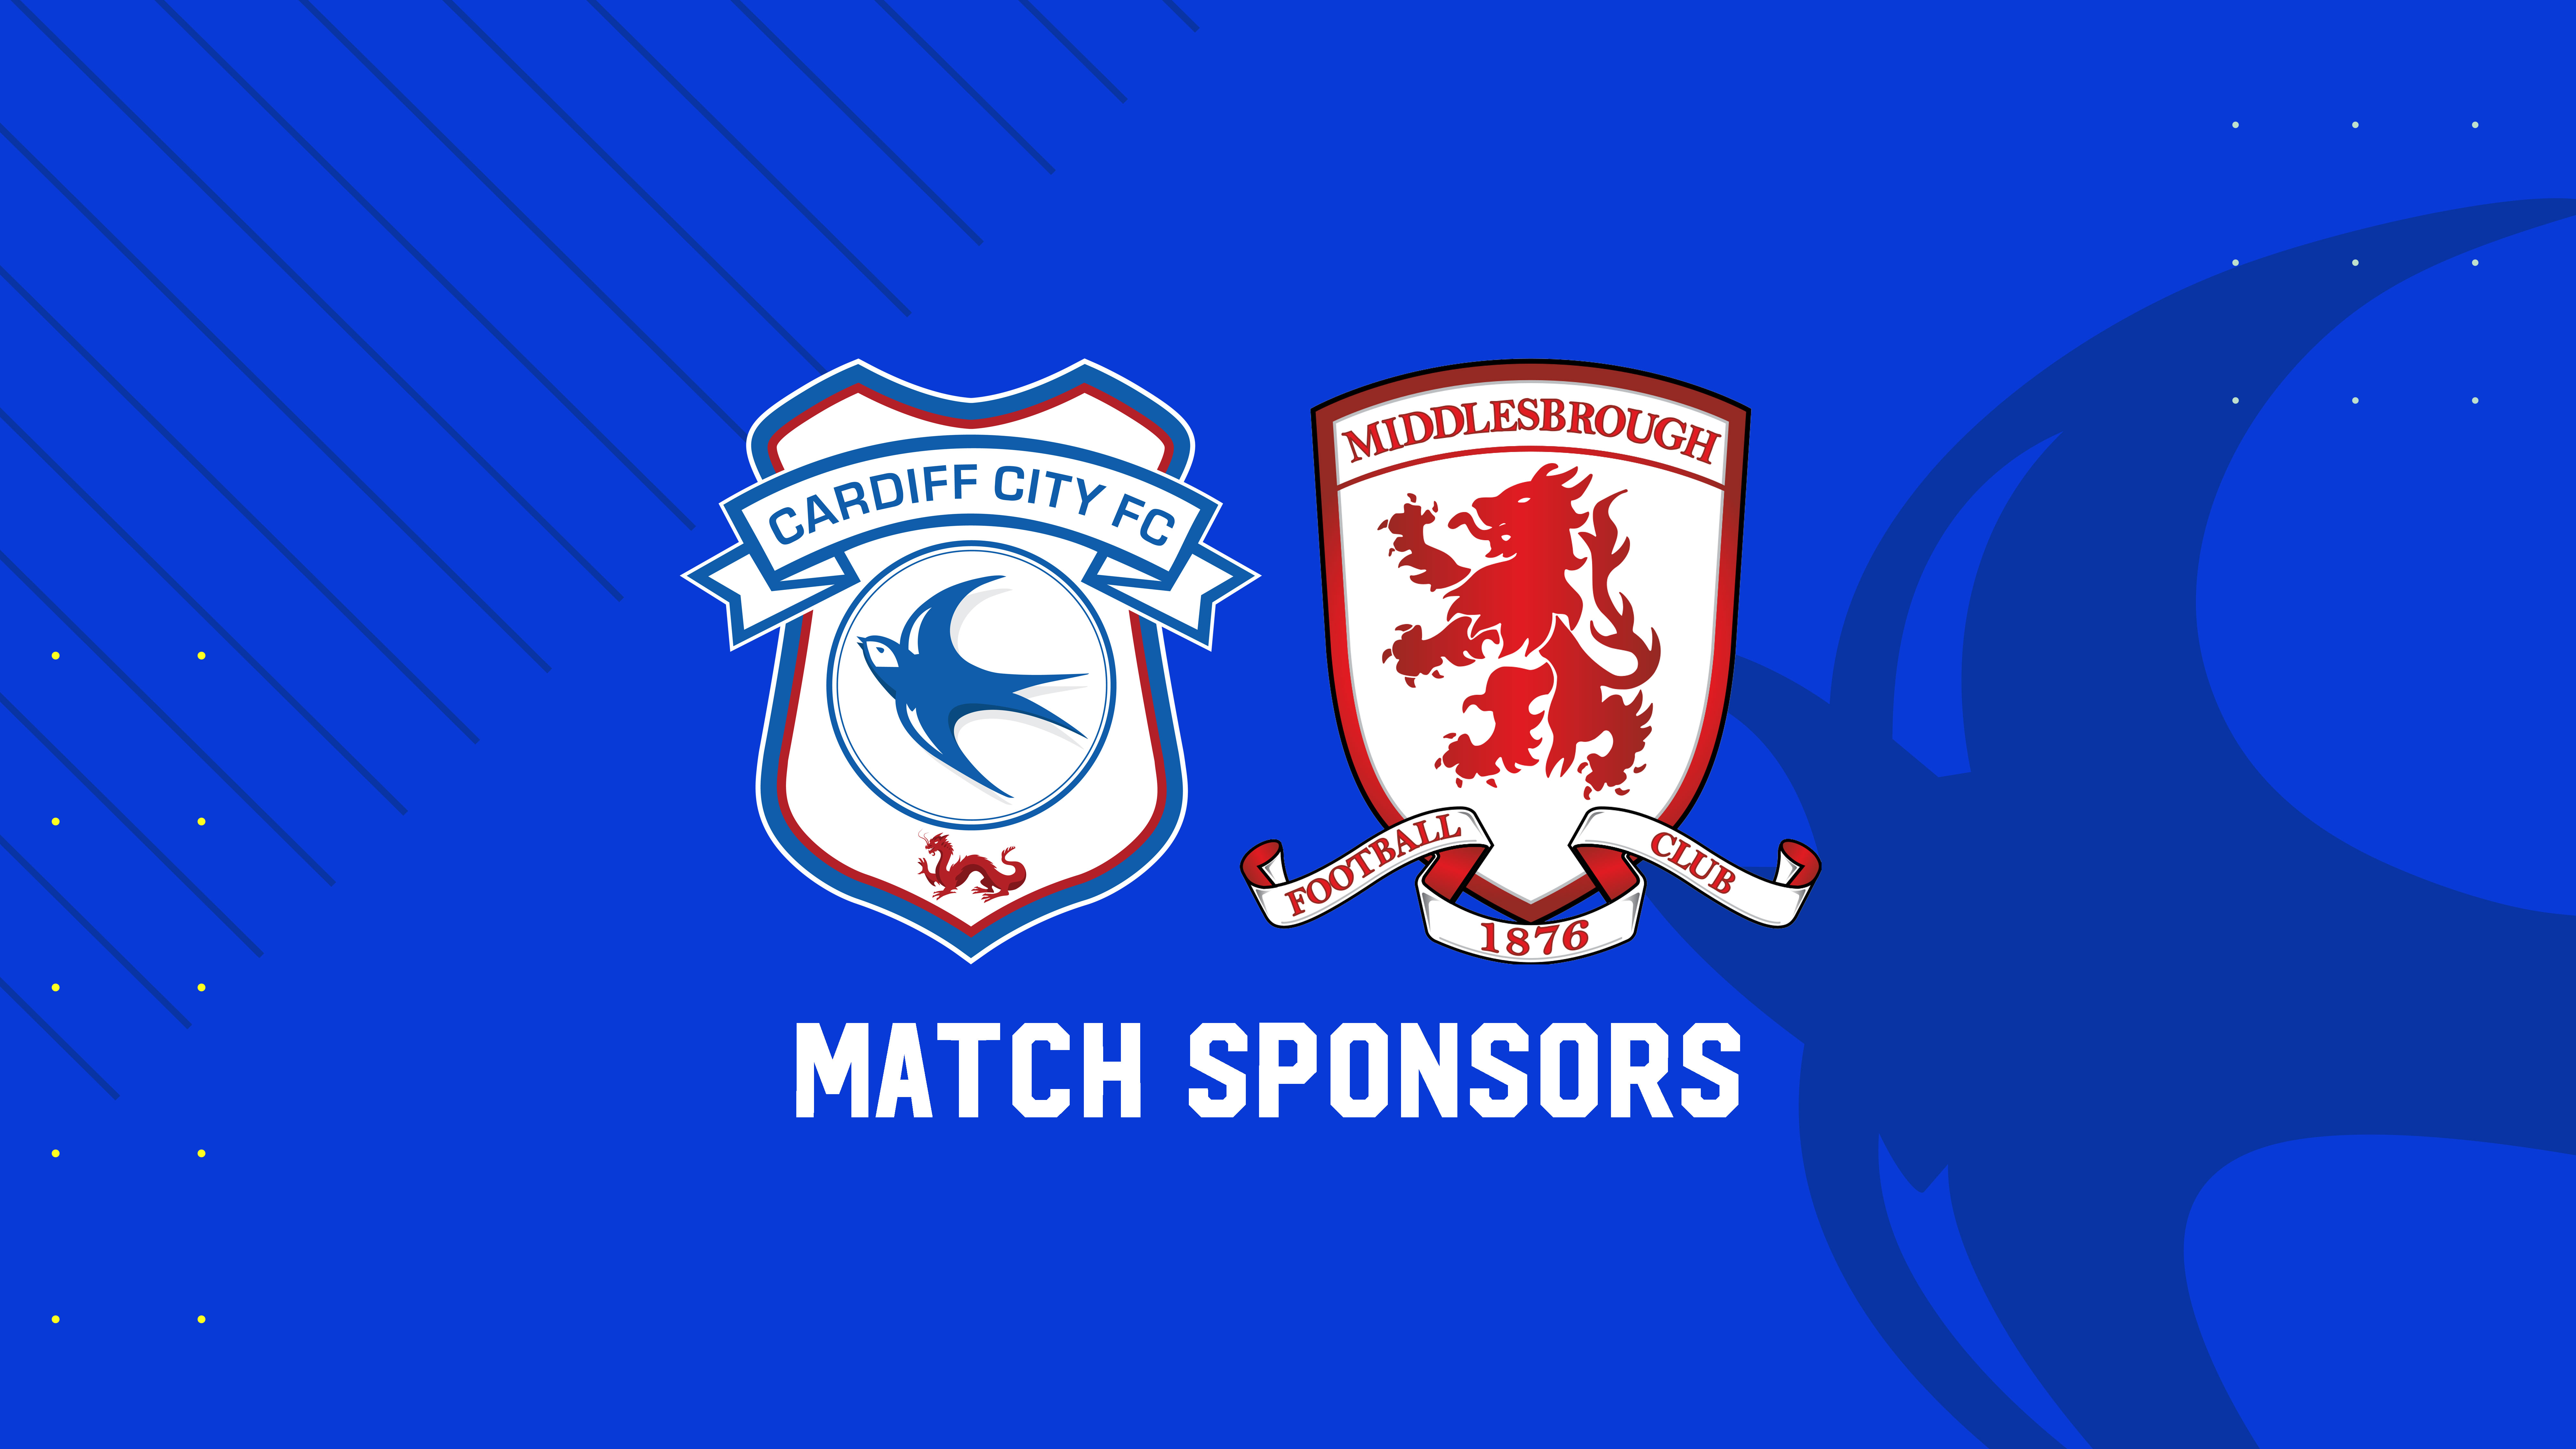 Match Sponsors: Cardiff City vs. Middlesbrough